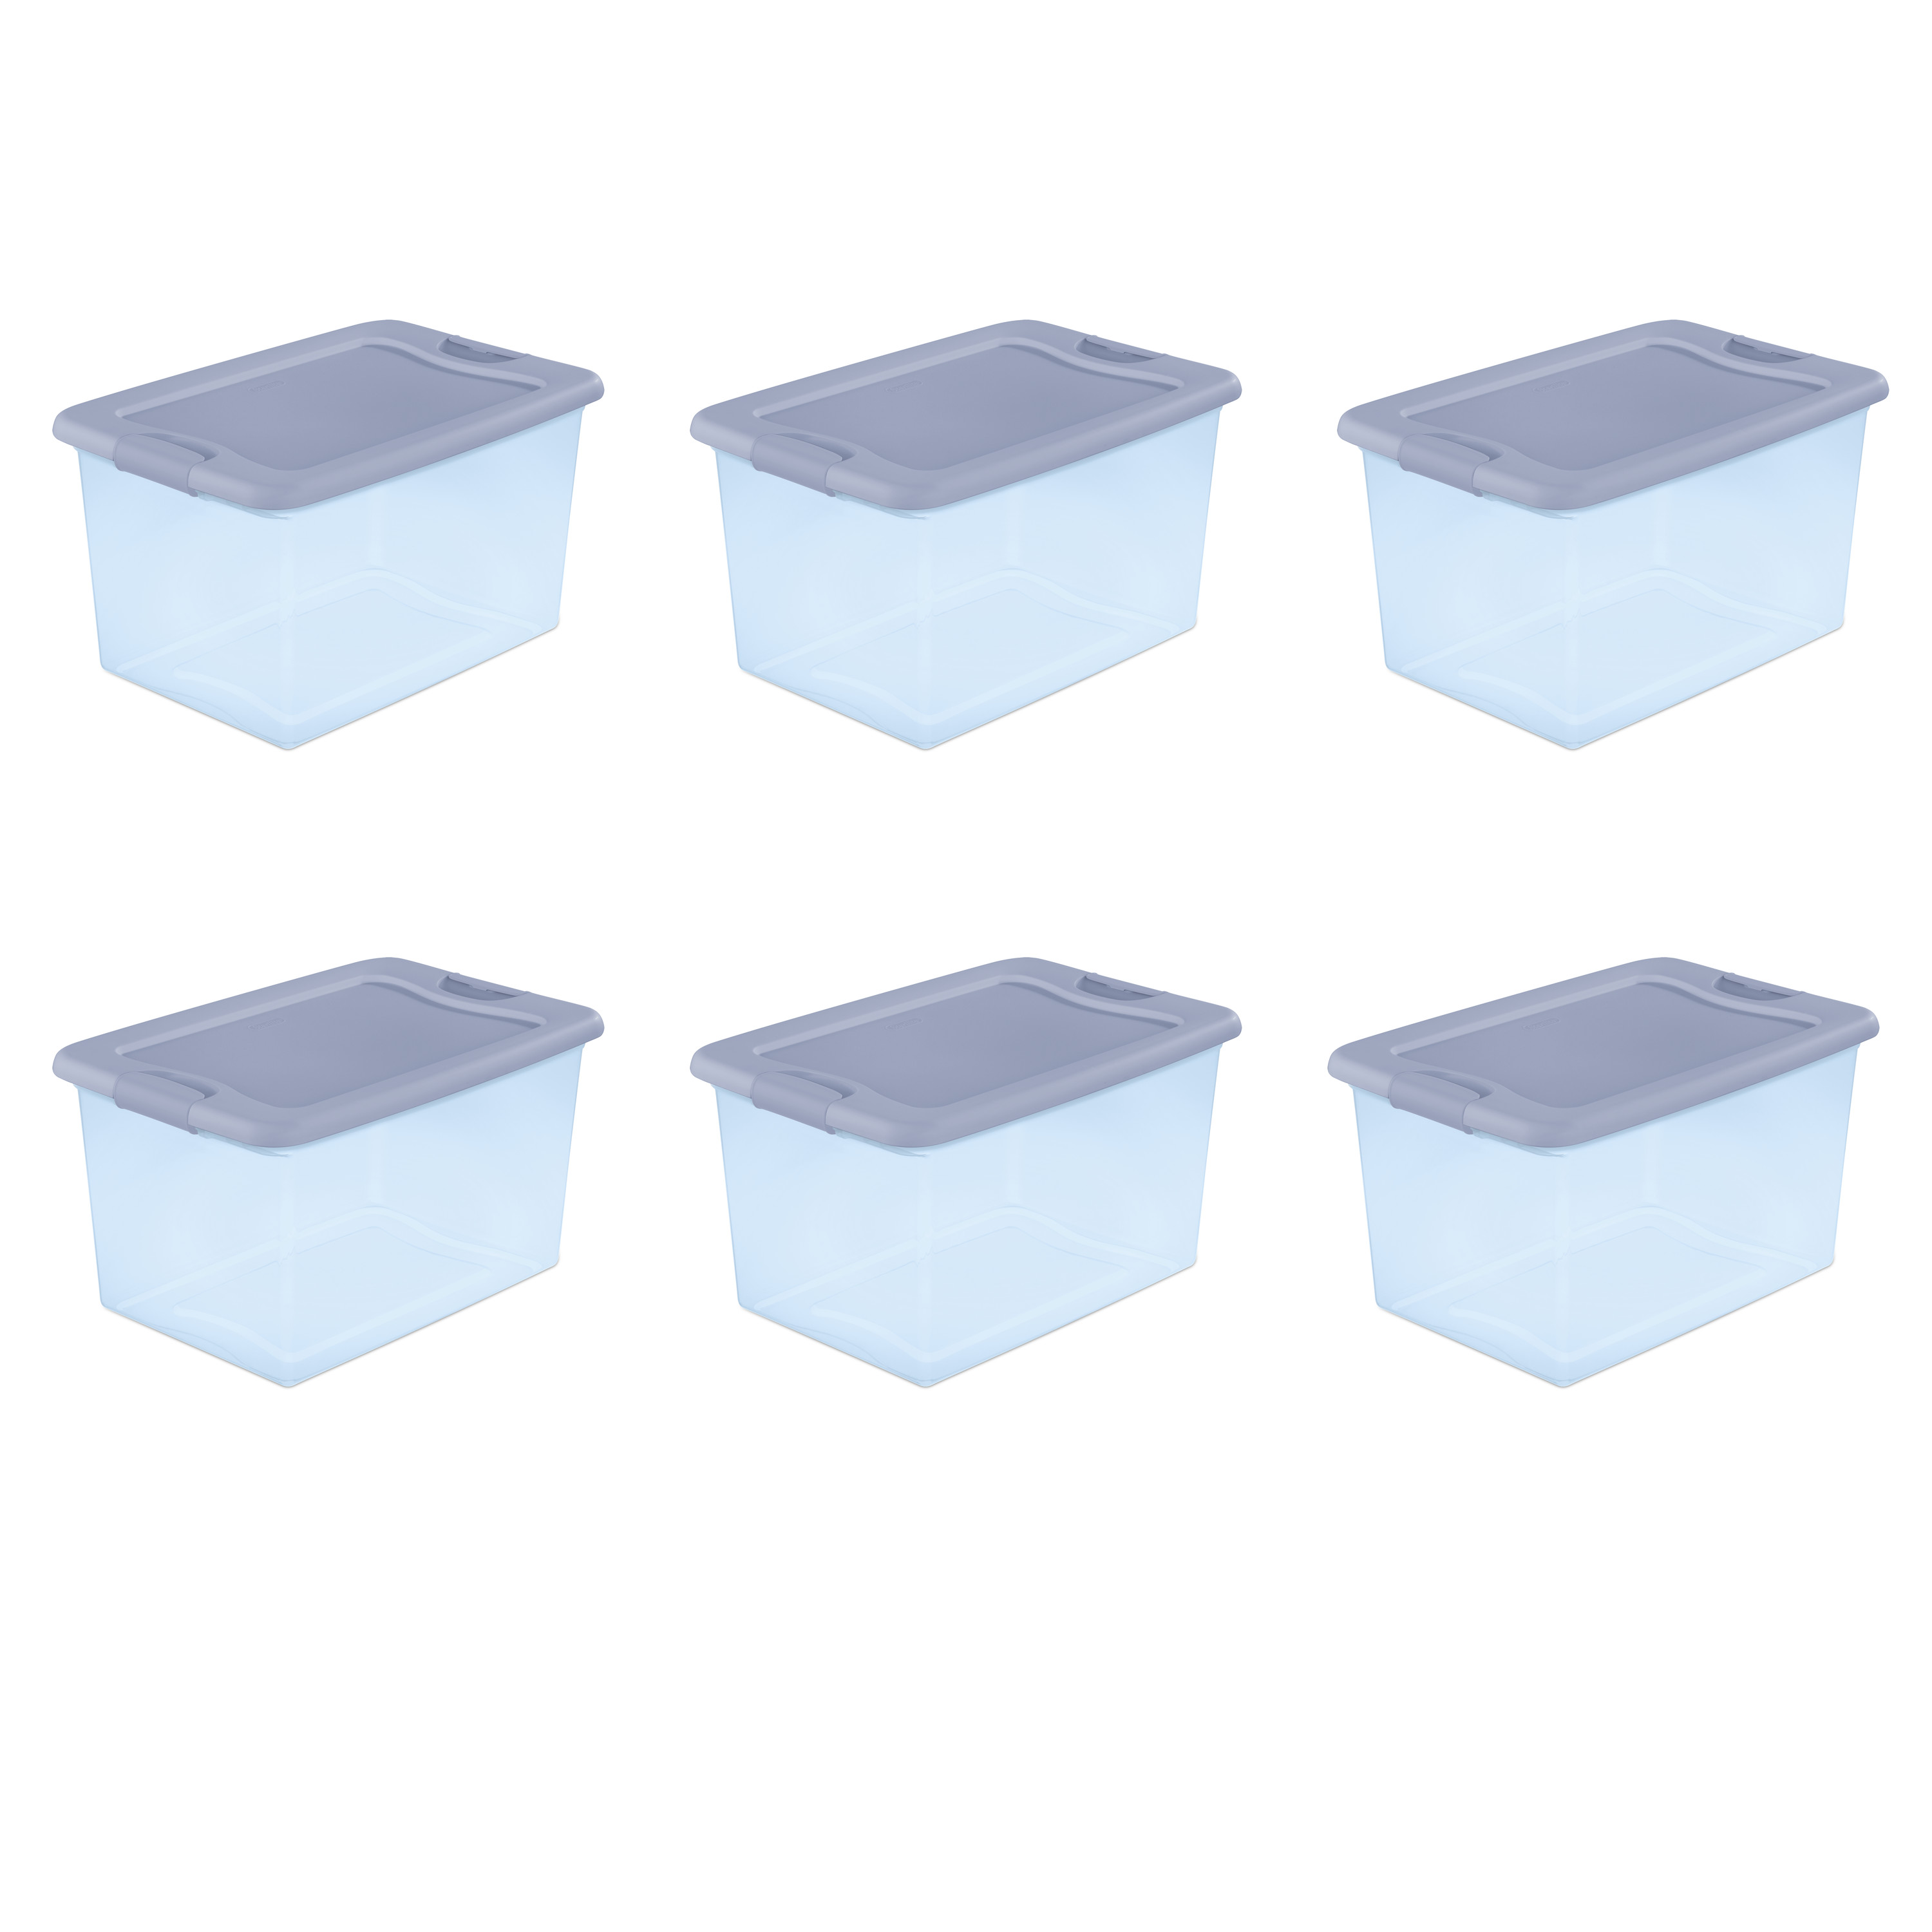 Sterilite 64 Qt. Latching Box Plastic, Blue Tint, Set of 6 - image 1 of 4